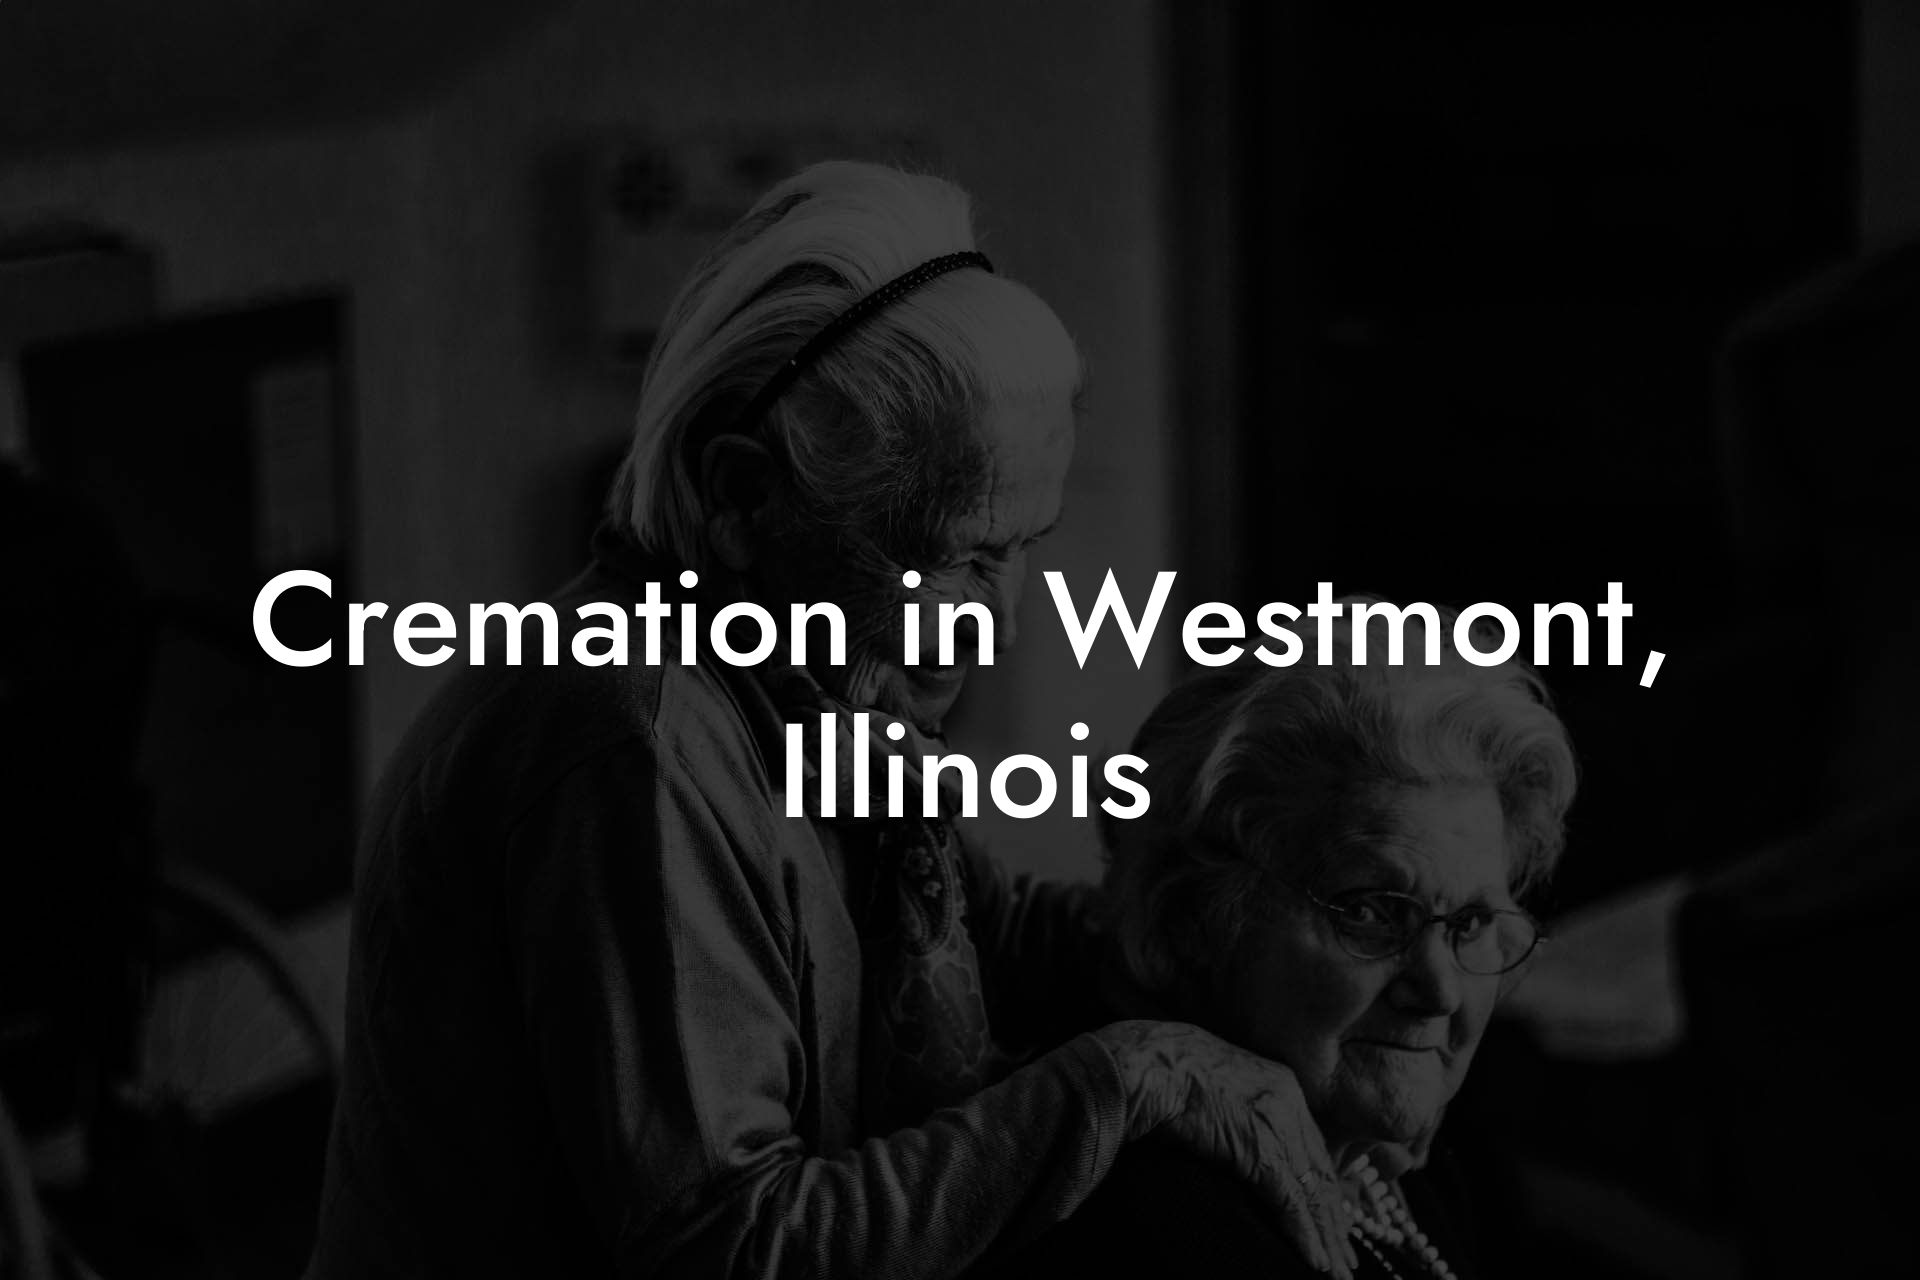 Cremation in Westmont, Illinois